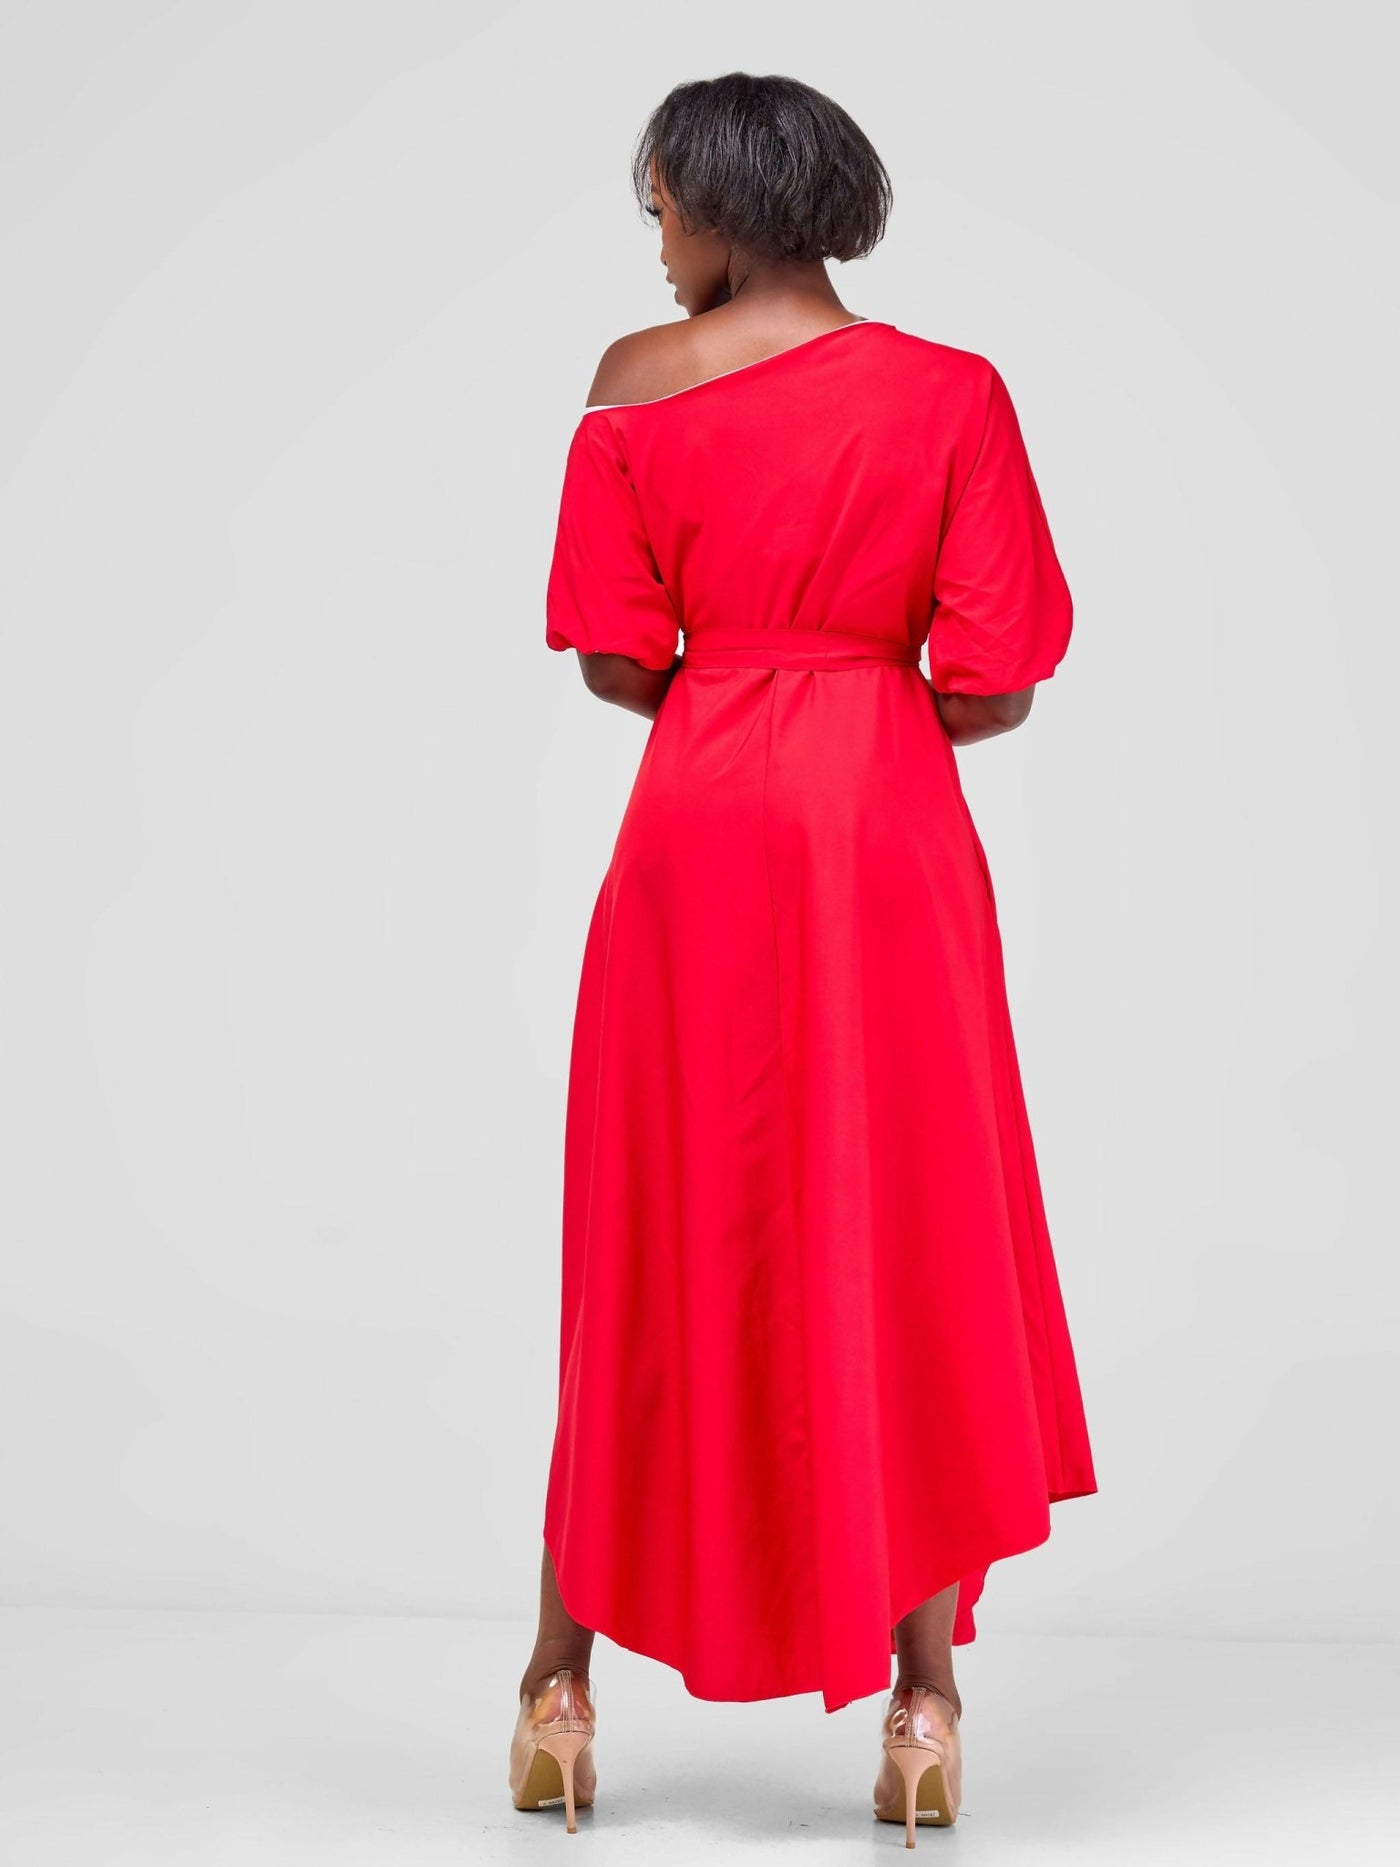 Stylish Sisters Dress - Red - Shopzetu